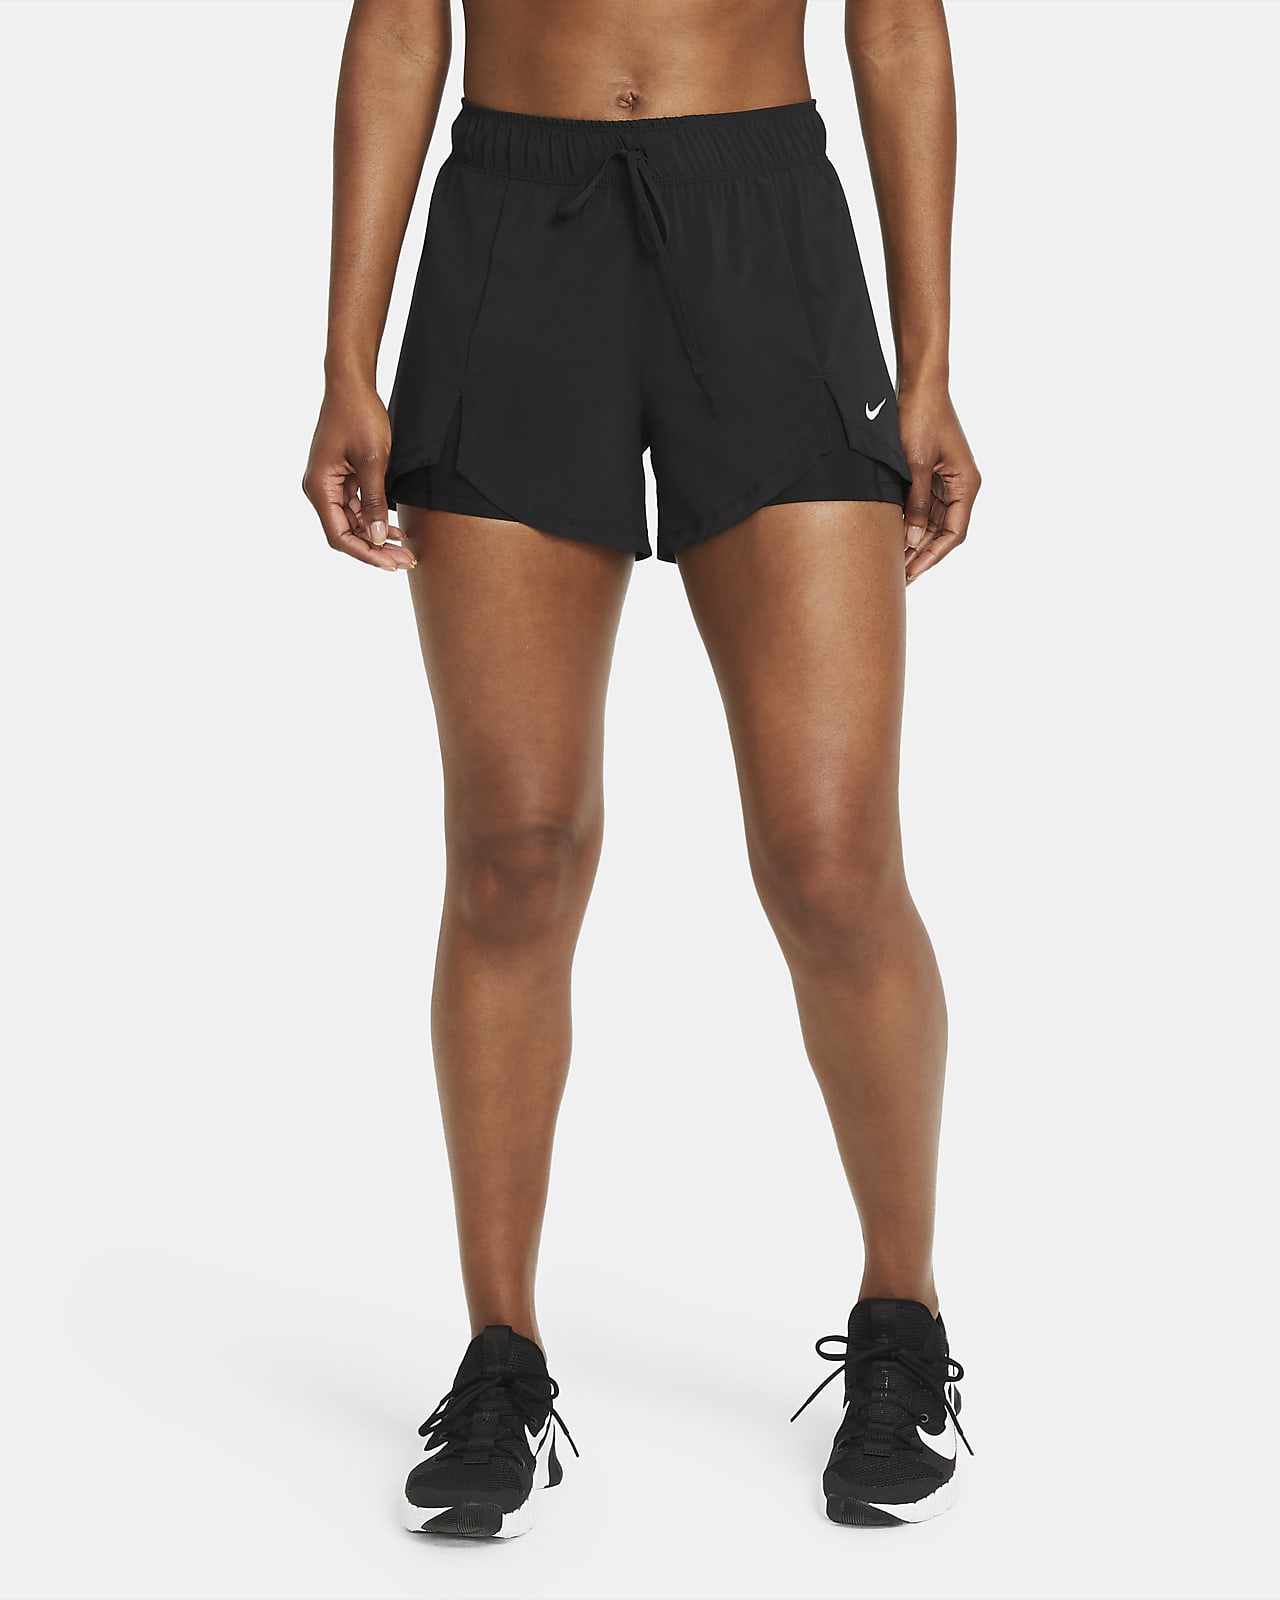 nike flex running shorts womens